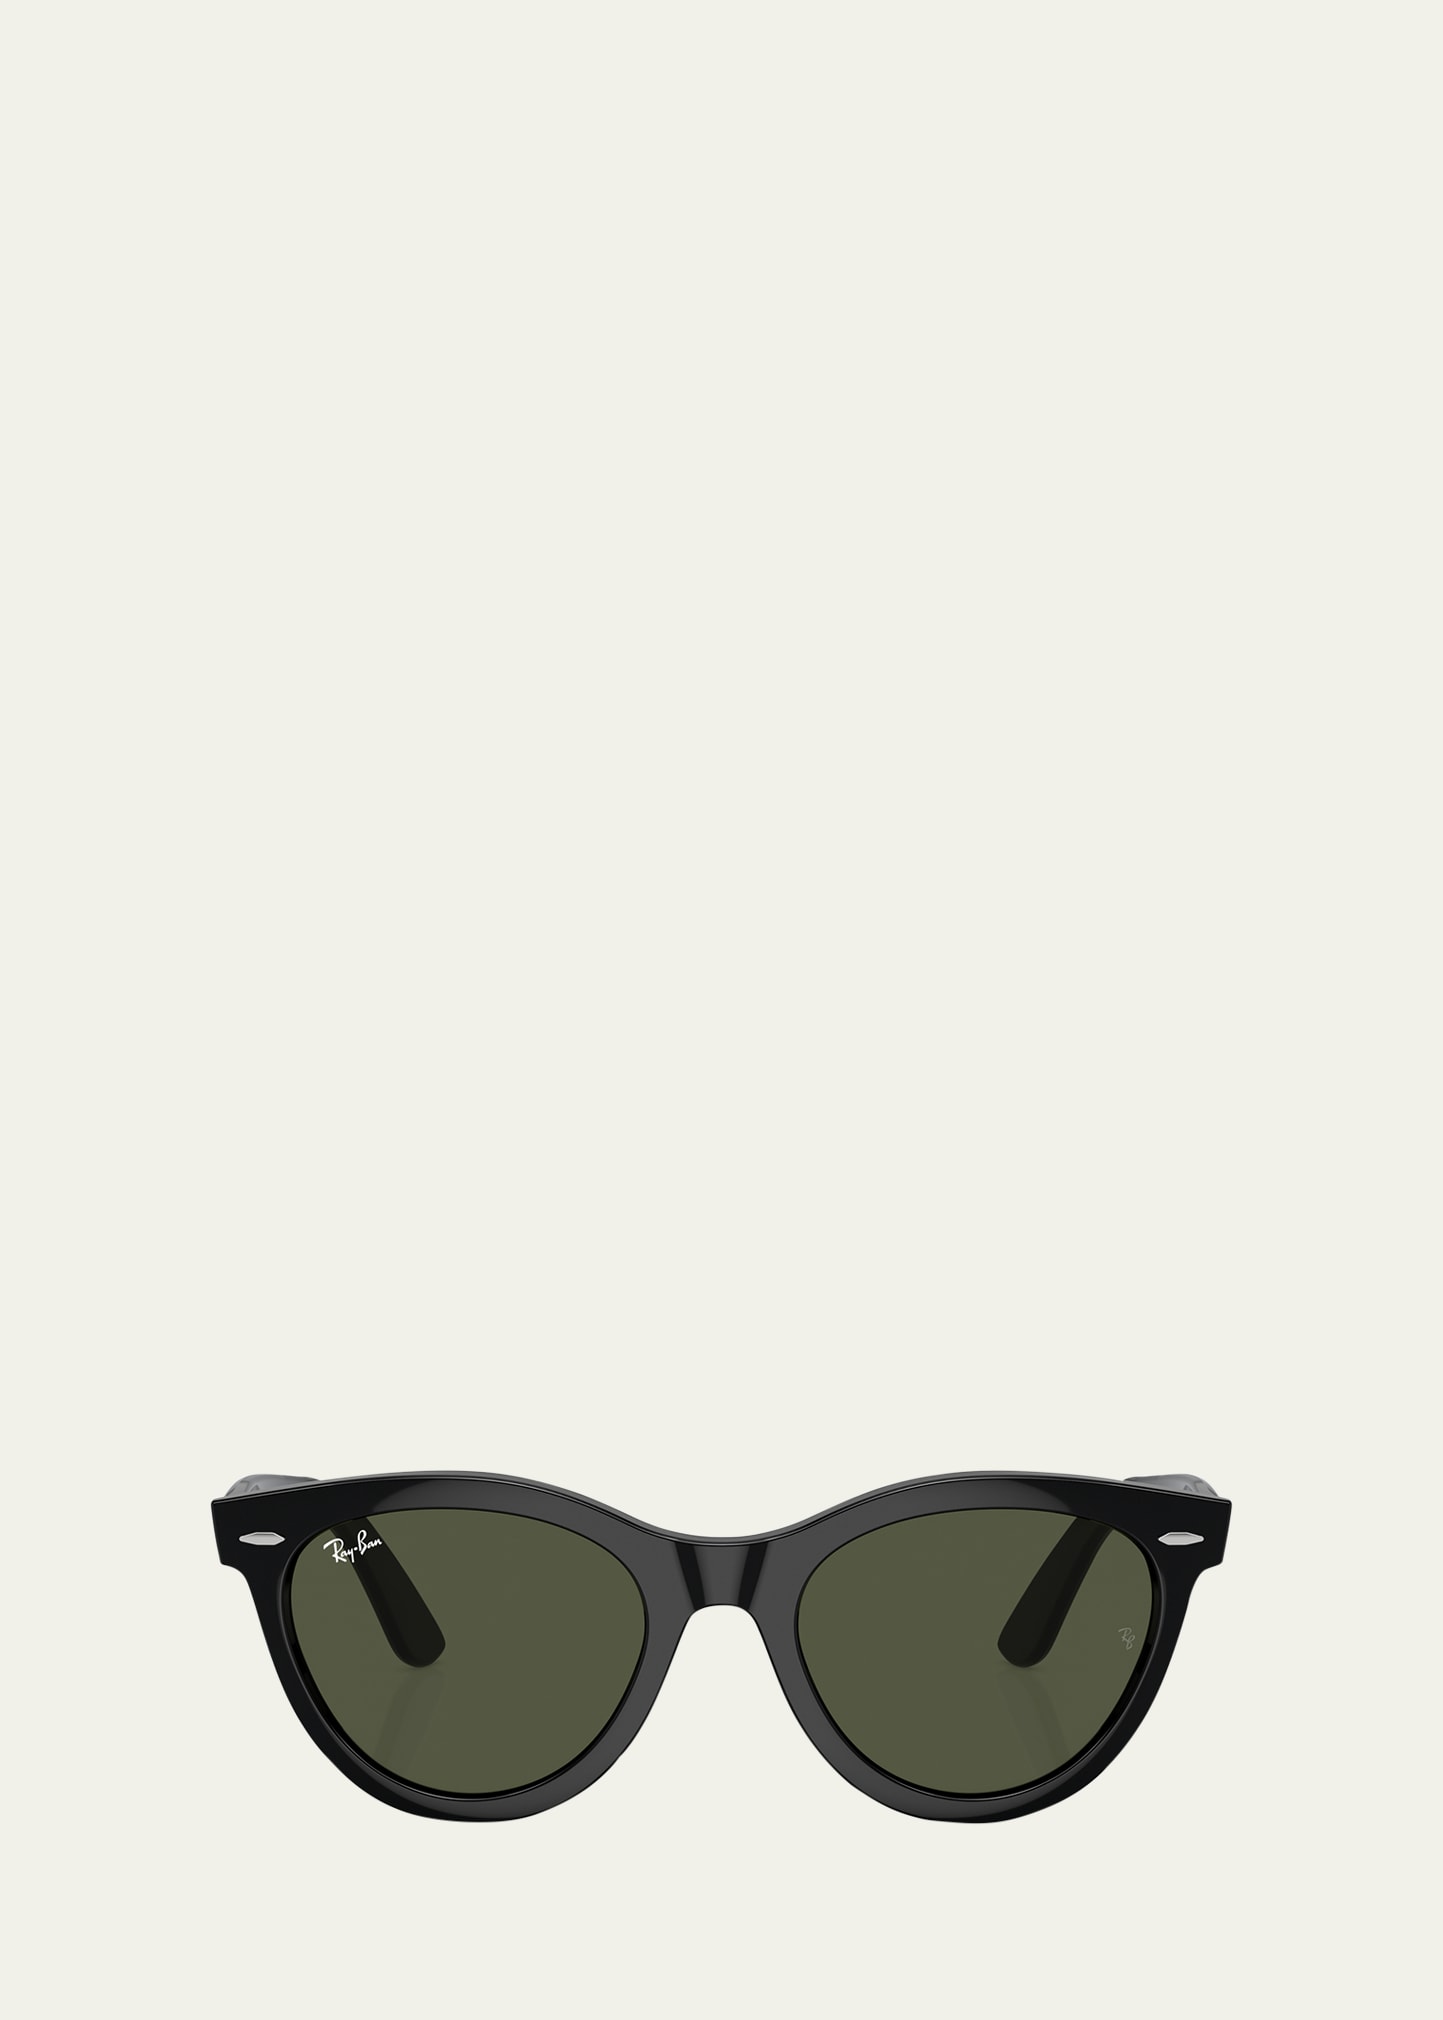 Wayfarer Way Propionate Sunglasses, 54mm